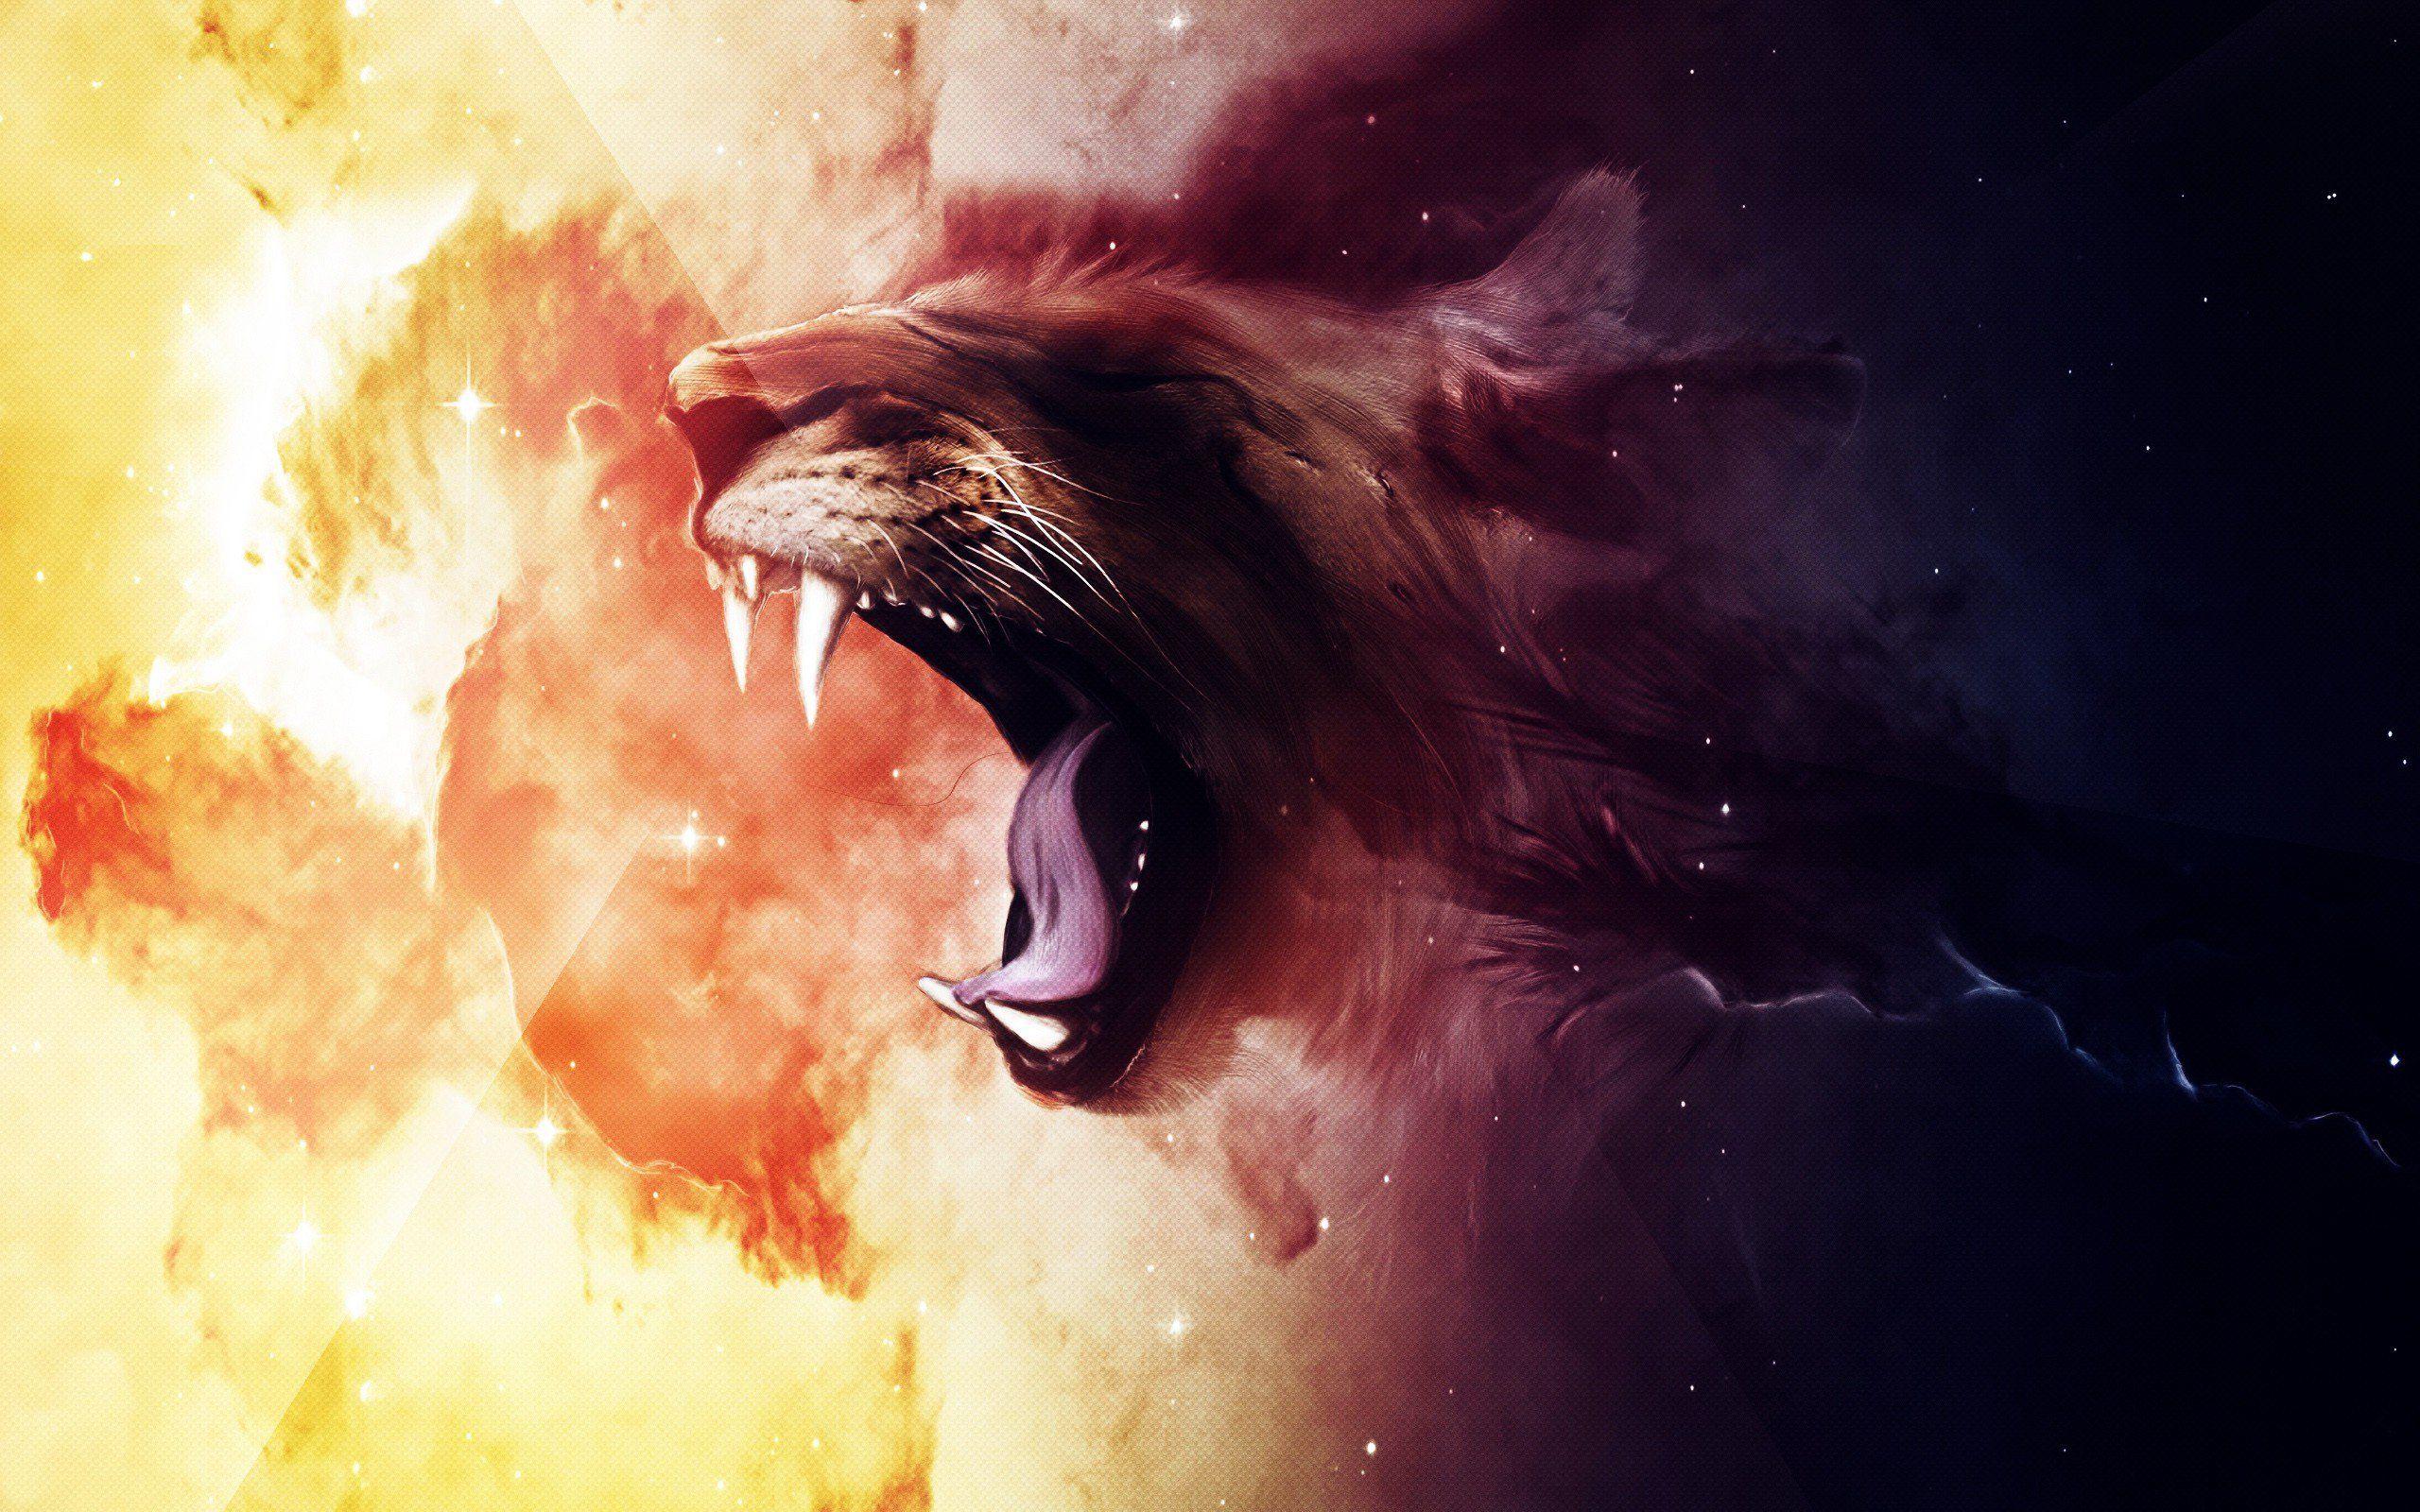 Roaring Lion, HD Creative, 4k Wallpaper, Image